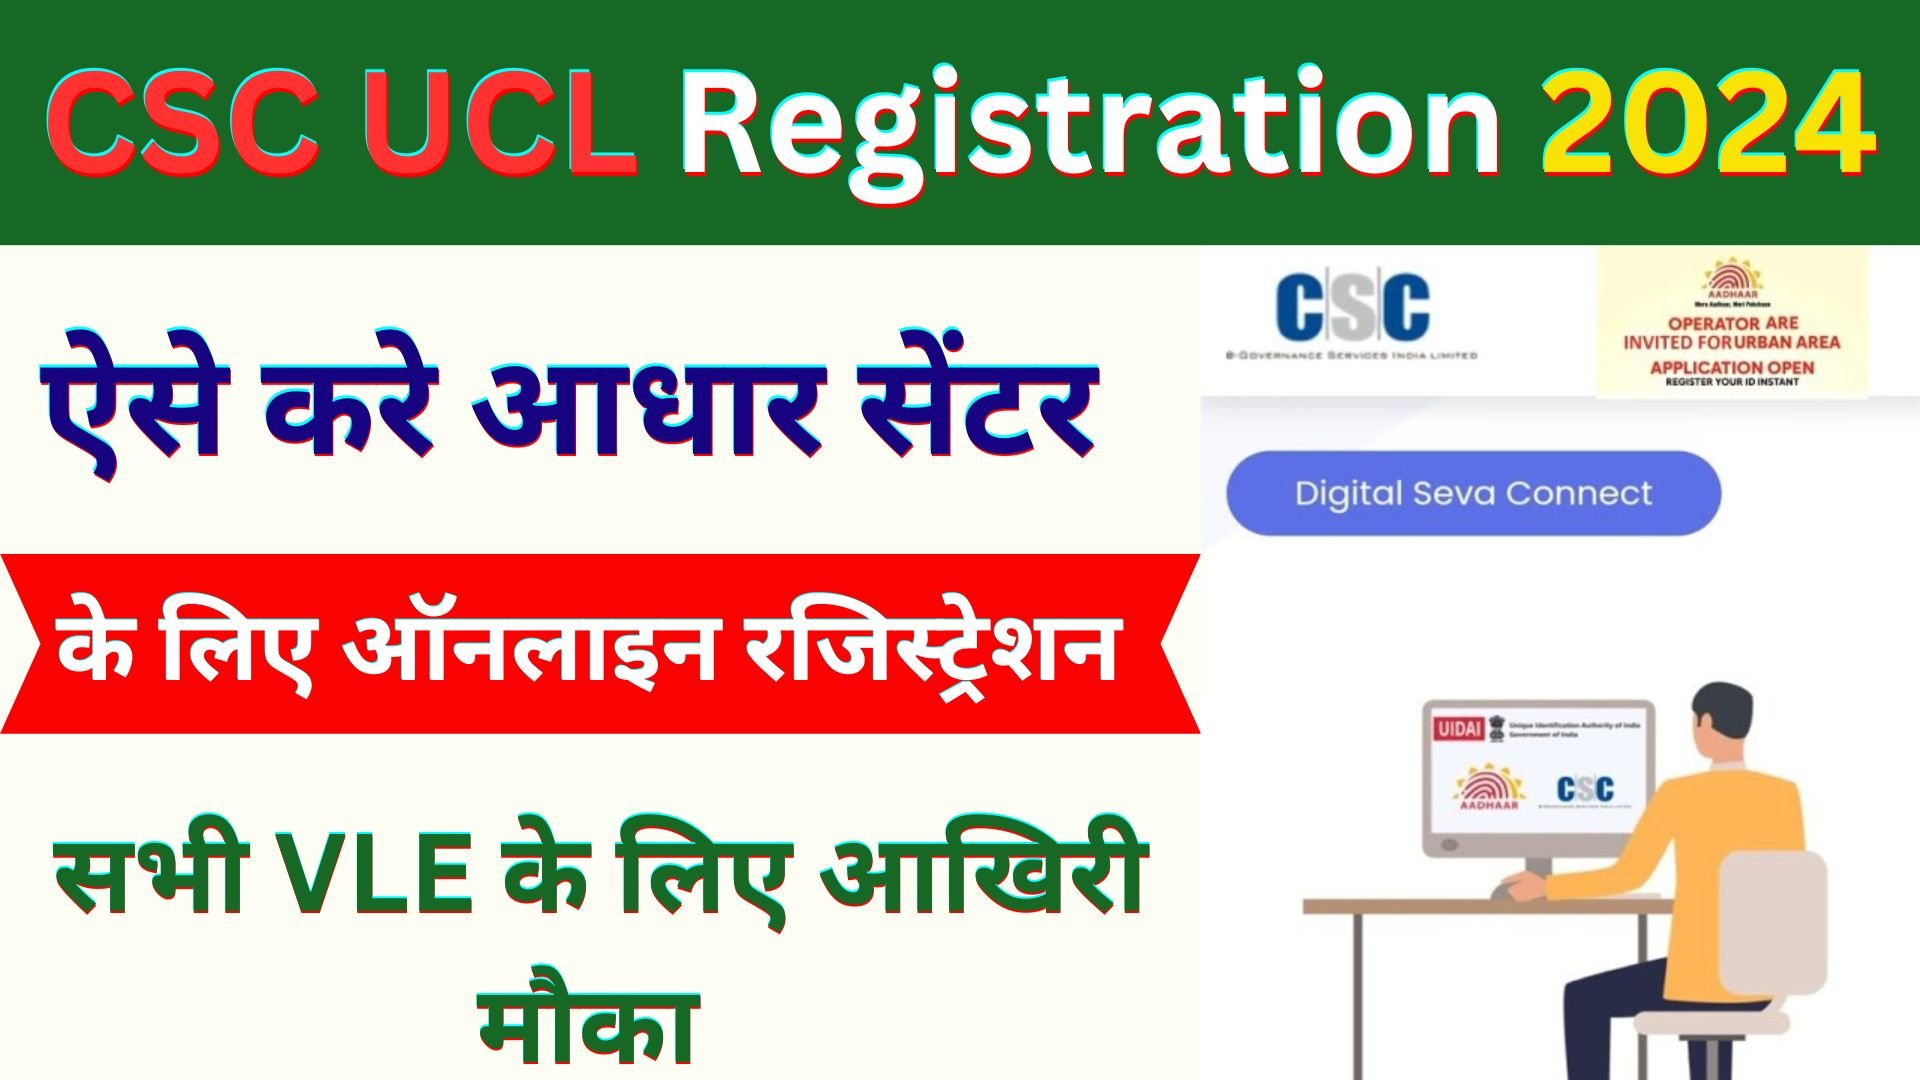 CSC Aadhar Center Registration 2024 : Aadhar Center Kaise khole 2024 | csc ucl Registration 2024